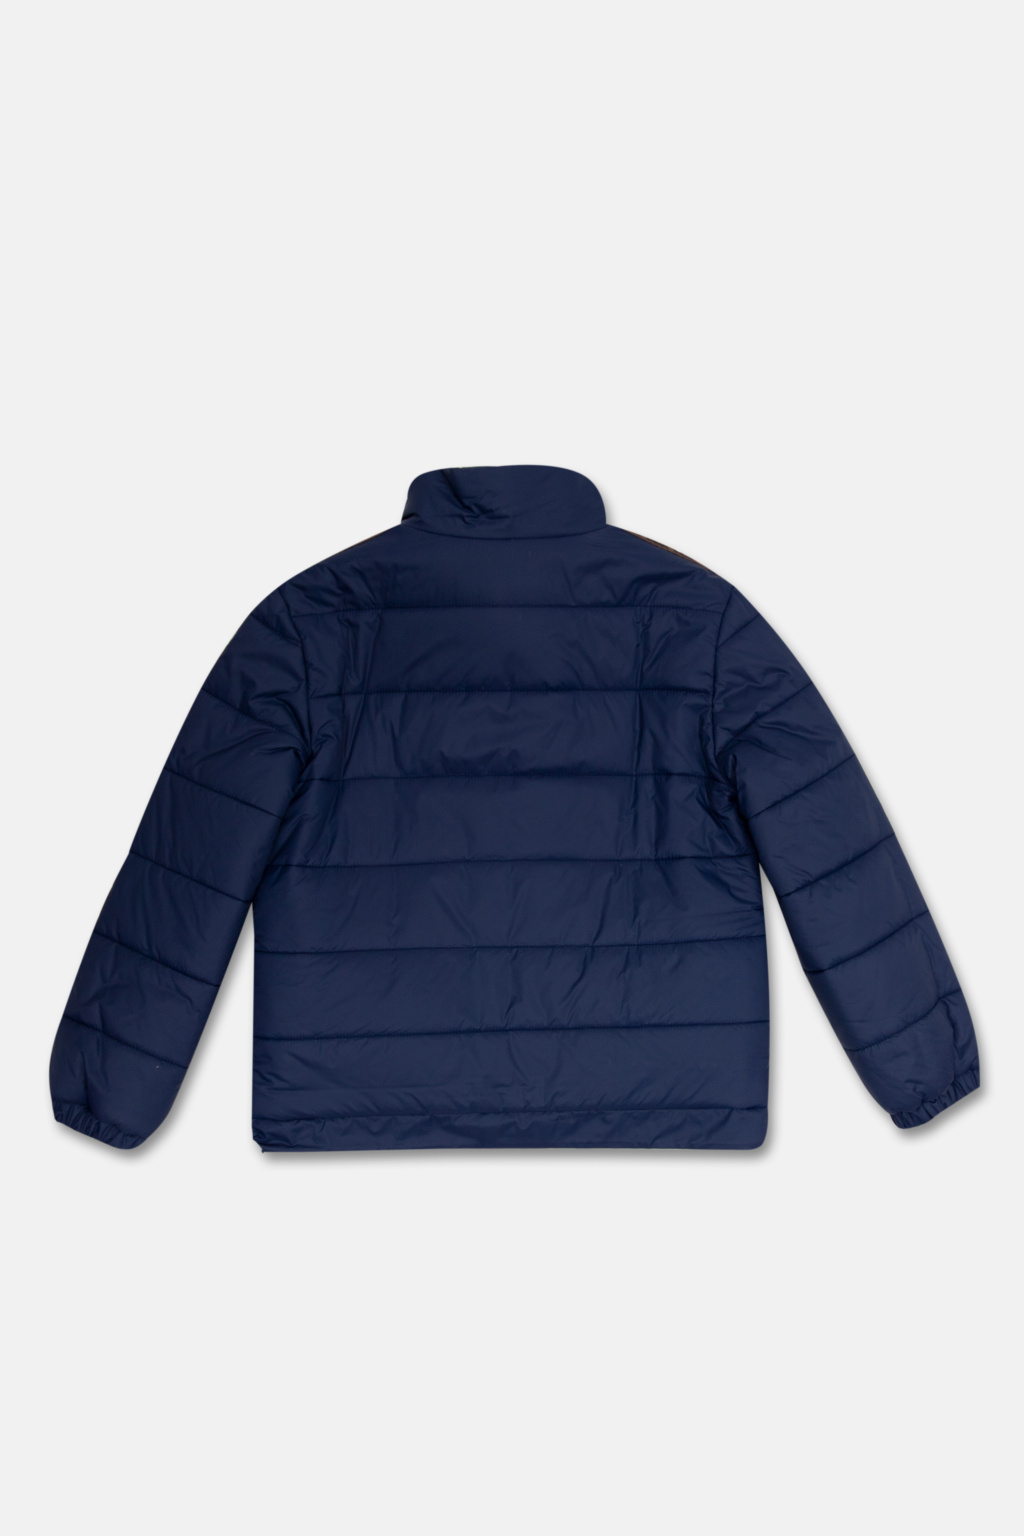 Fendi Kids Reversible jacket